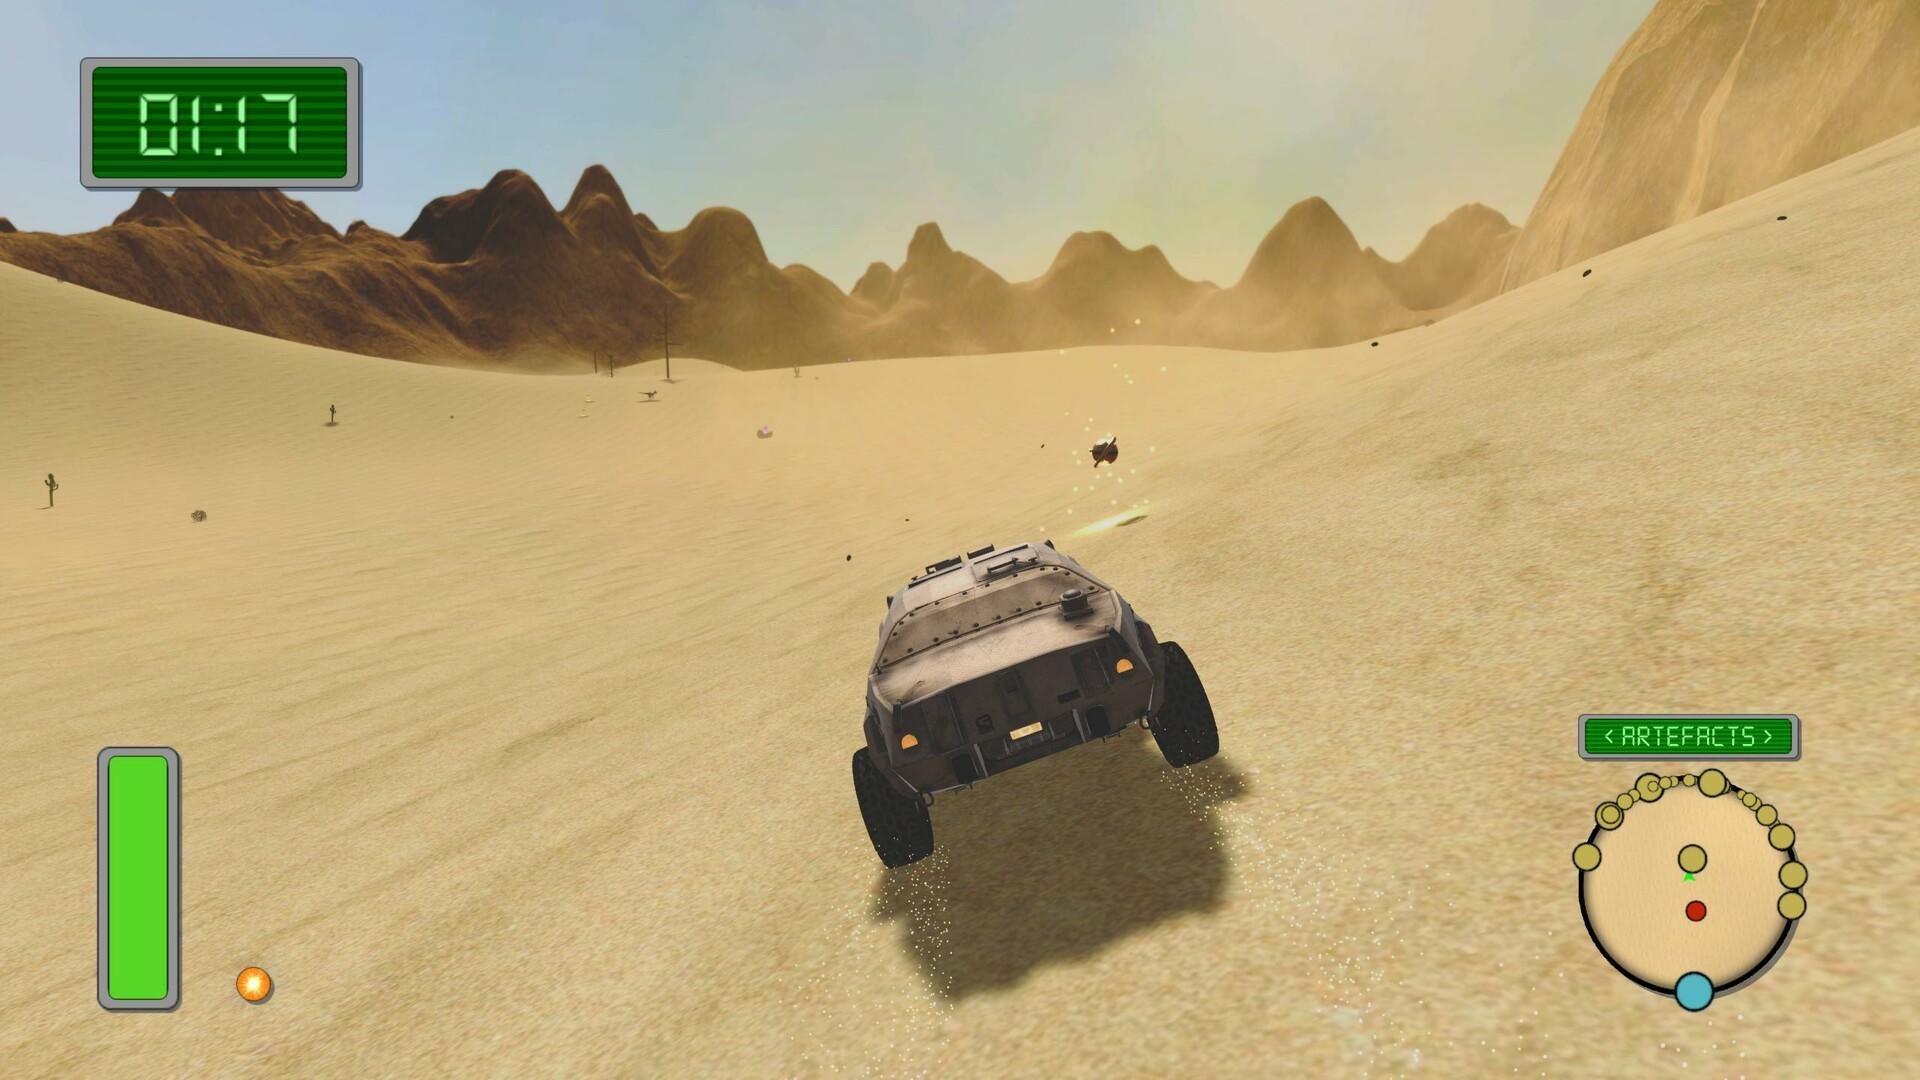 Dune of the Desert ภาพหน้าจอเกม